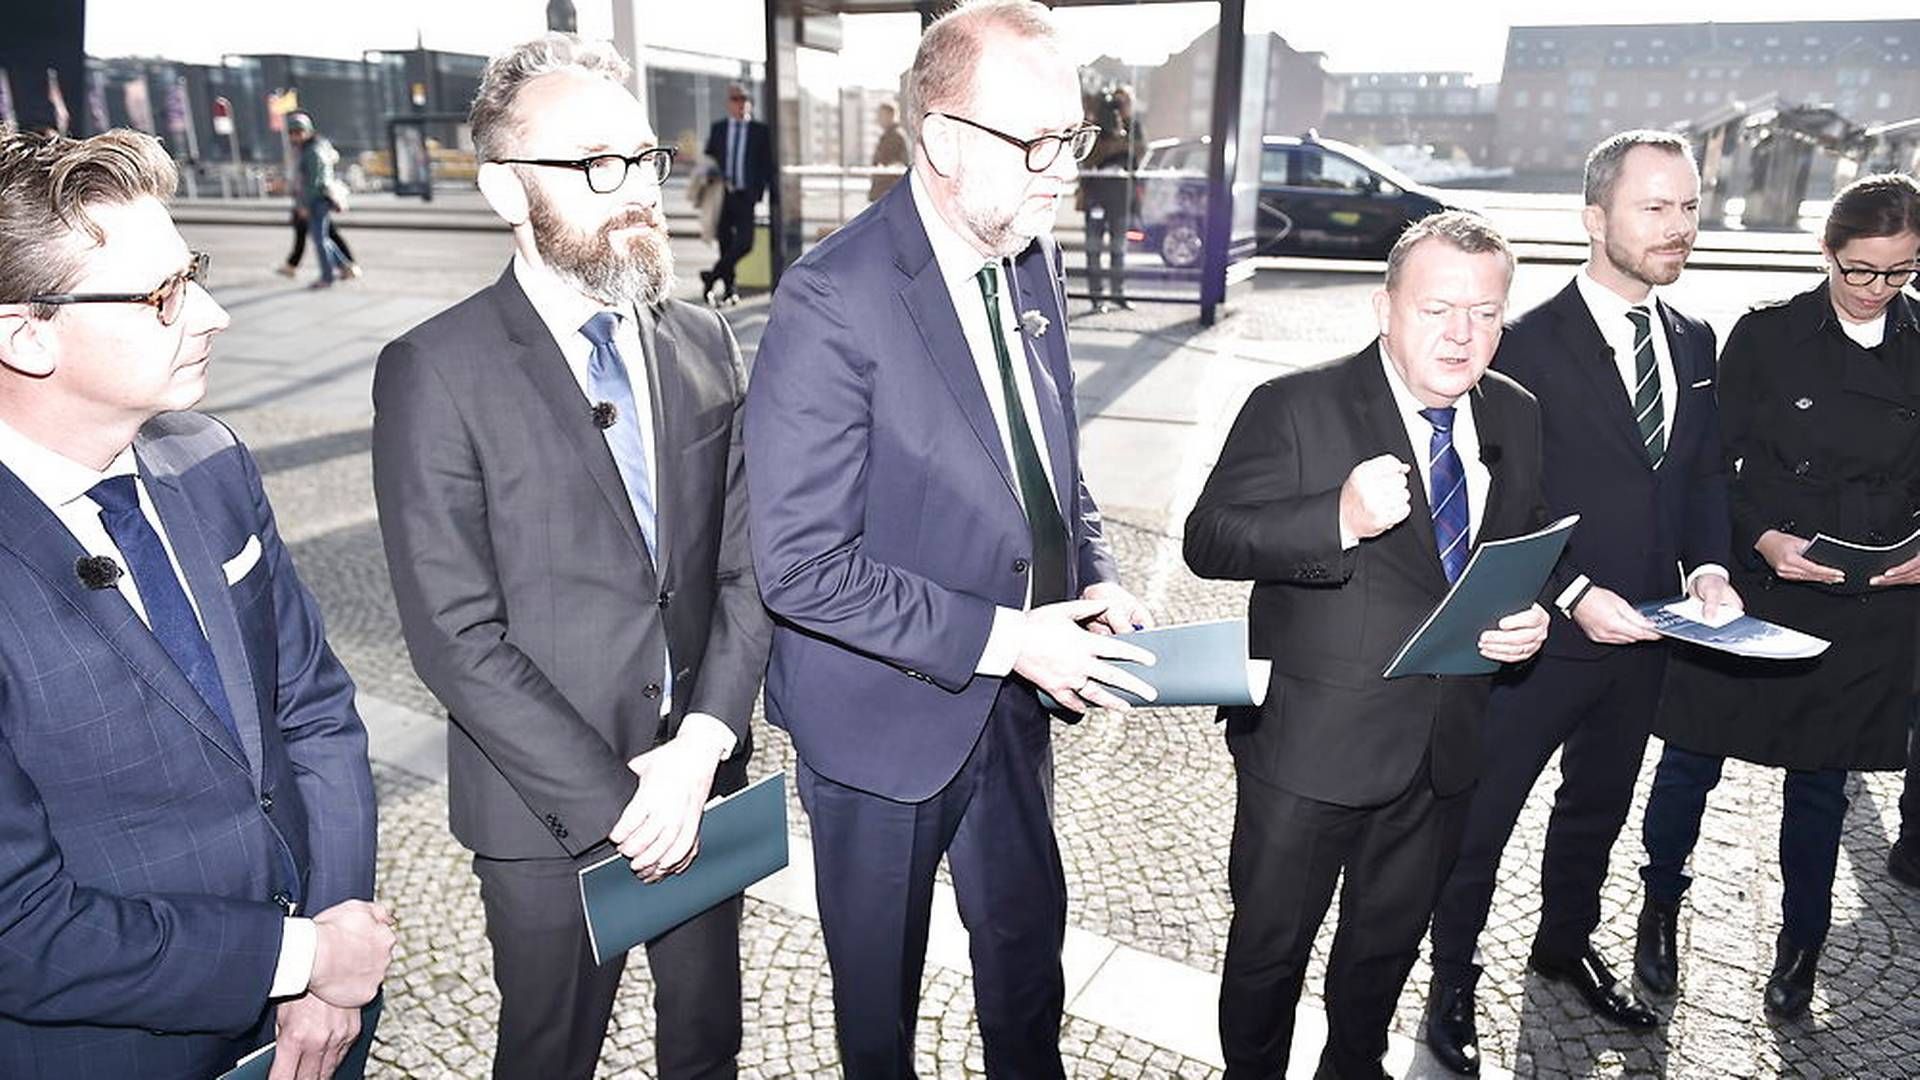 Hele seks ministre præsenterer regeringens klimaudspil. | Foto: Mads Claus Rasmussen/Ritzau Scanpix